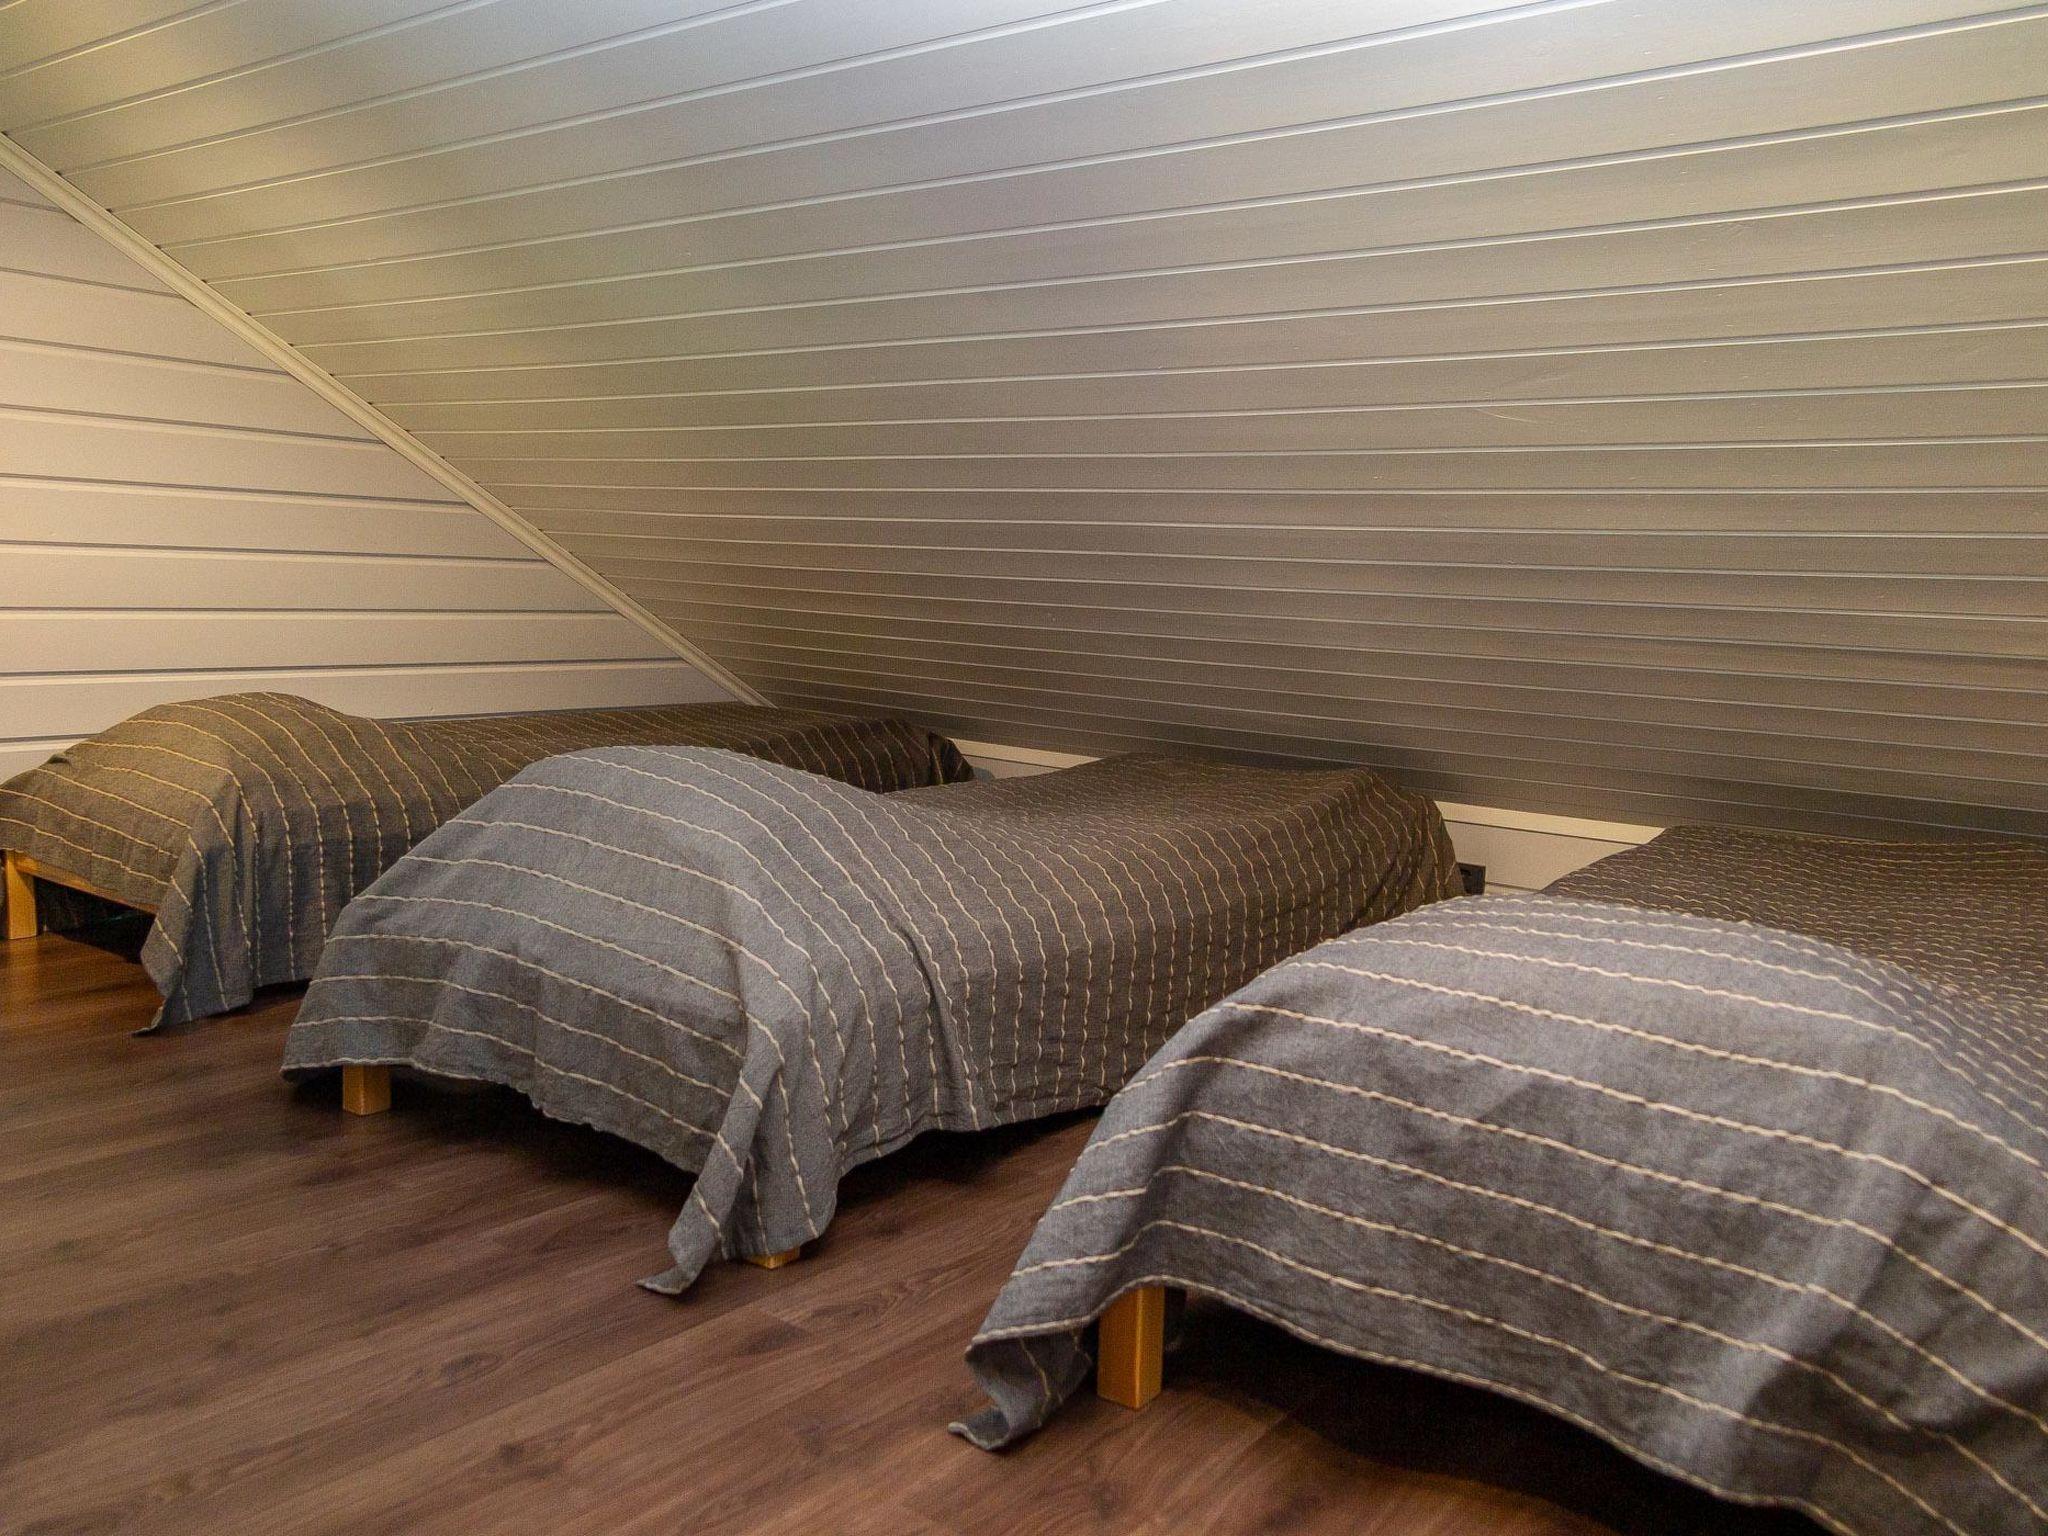 Photo 8 - 1 bedroom House in Kuopio with sauna